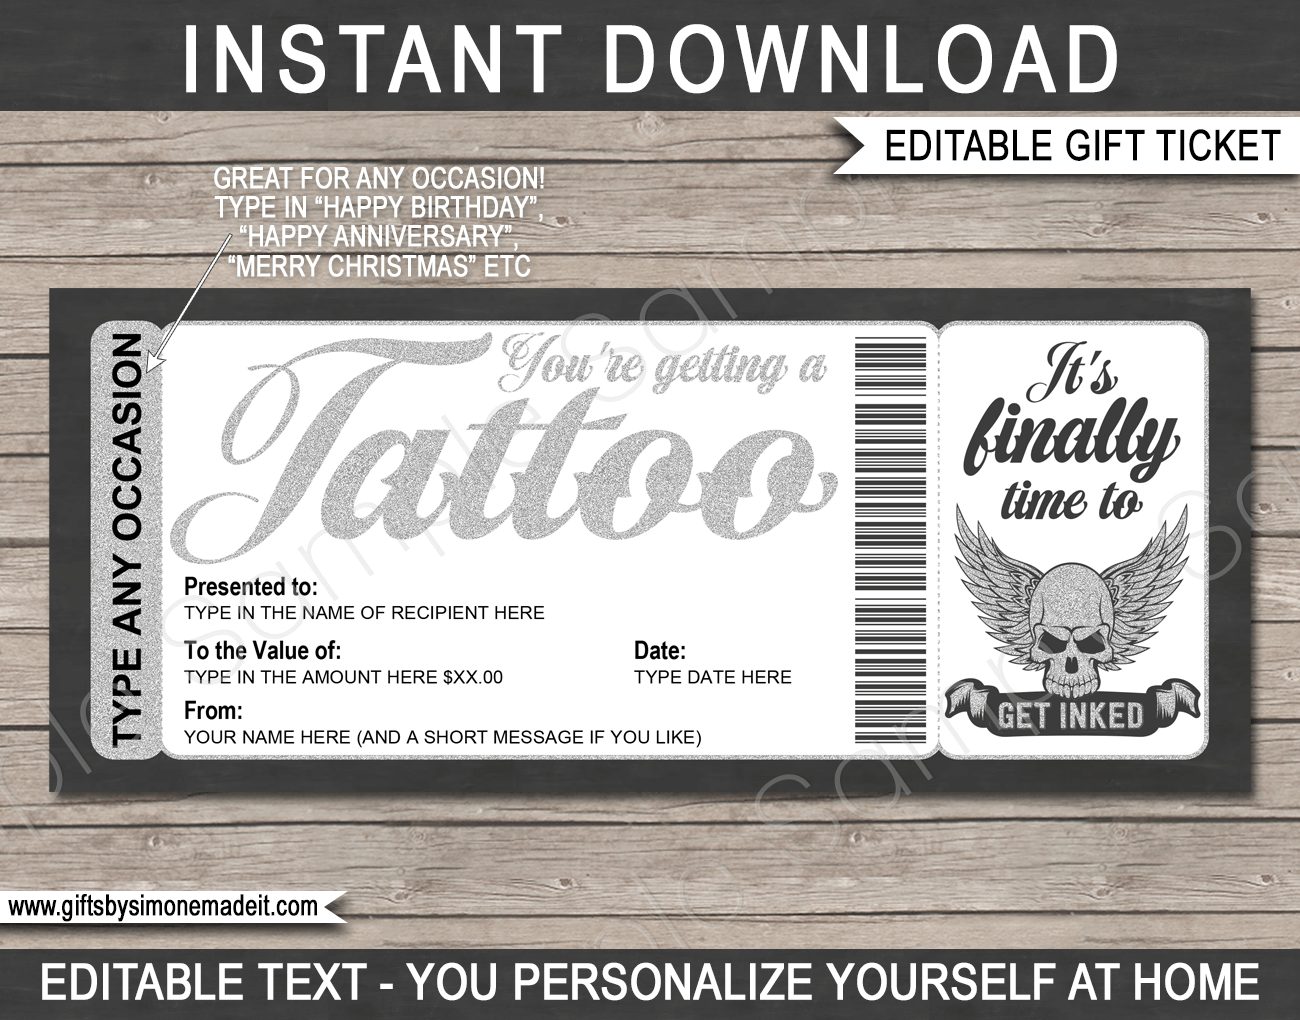 Tattoo Gift Certificate Template